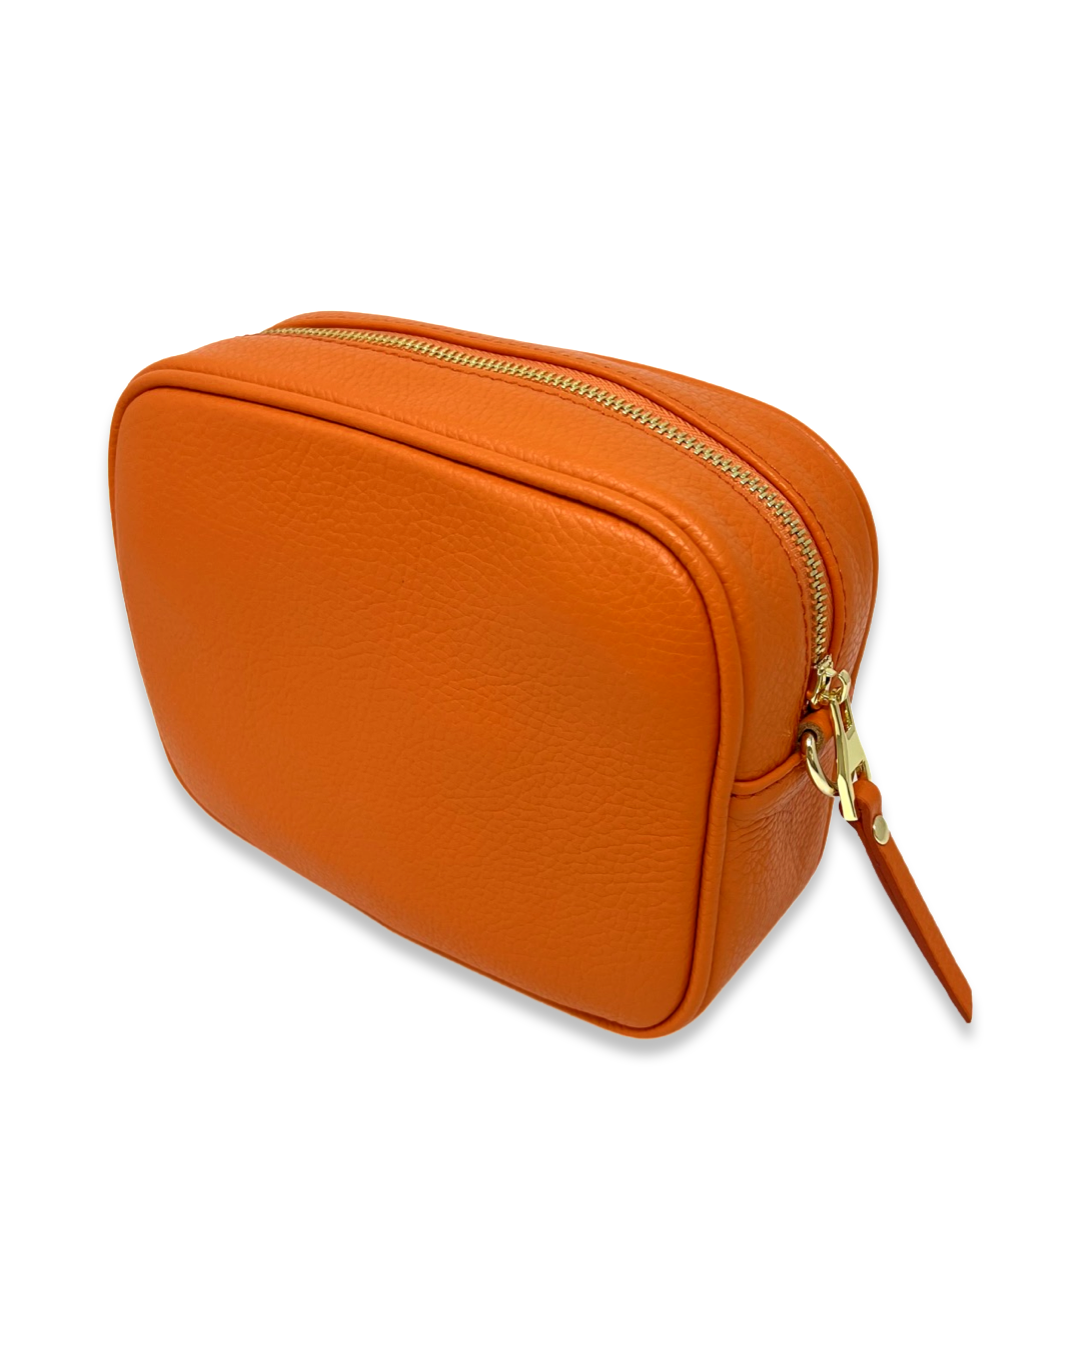 Firenze Bag in Tangerine